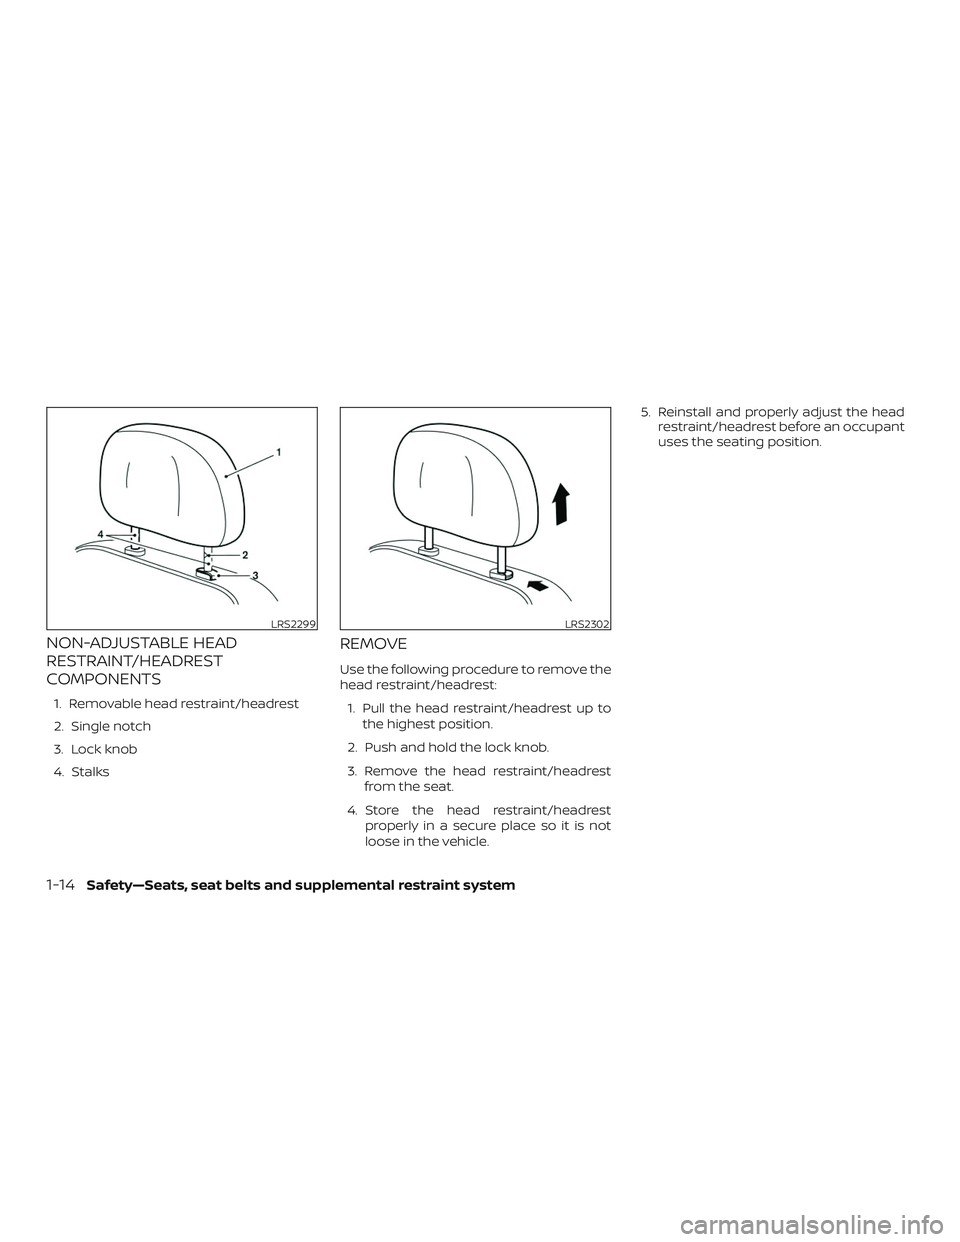 NISSAN PATHFINDER 2018  Owner´s Manual NON-ADJUSTABLE HEAD
RESTRAINT/HEADREST
COMPONENTS
1. Removable head restraint/headrest
2. Single notch
3. Lock knob
4. Stalks
REMOVE
Use the following procedure to remove the
head restraint/headrest:1